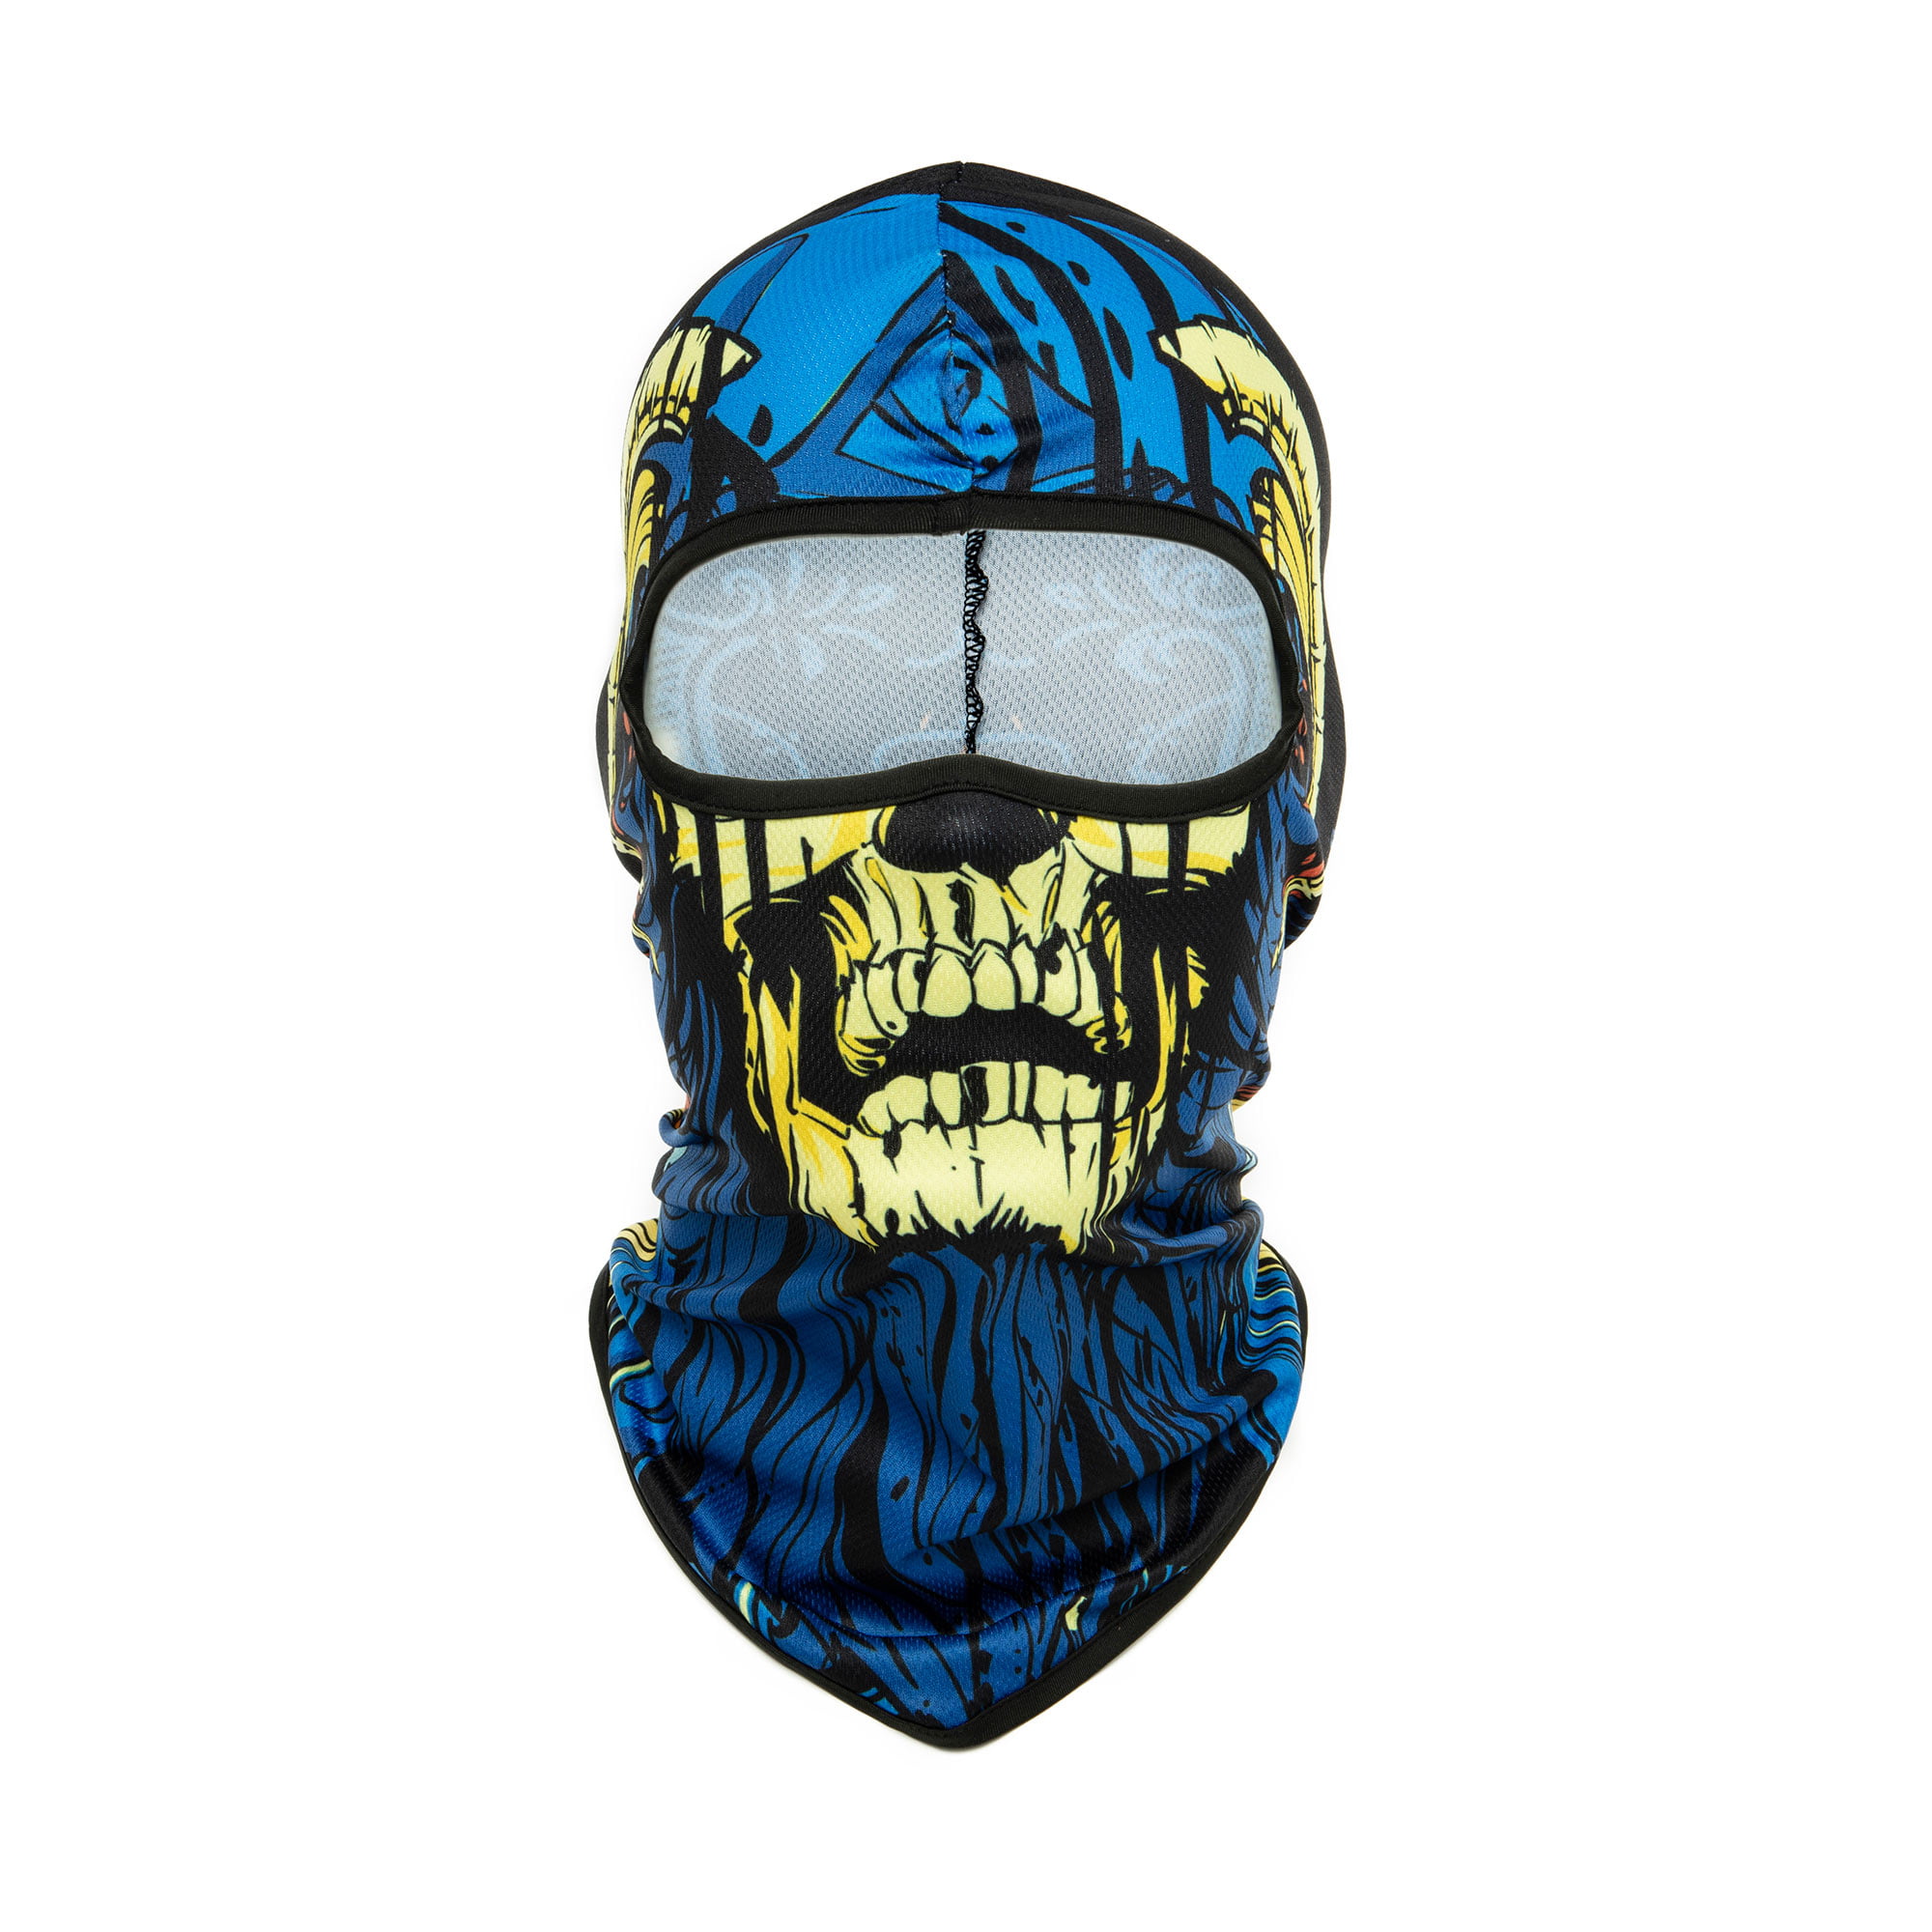 Magic Headwear Question Outdoor Scarf Headbands Bandana Mask Neck Gaiter Head Wrap Mask Sweatband